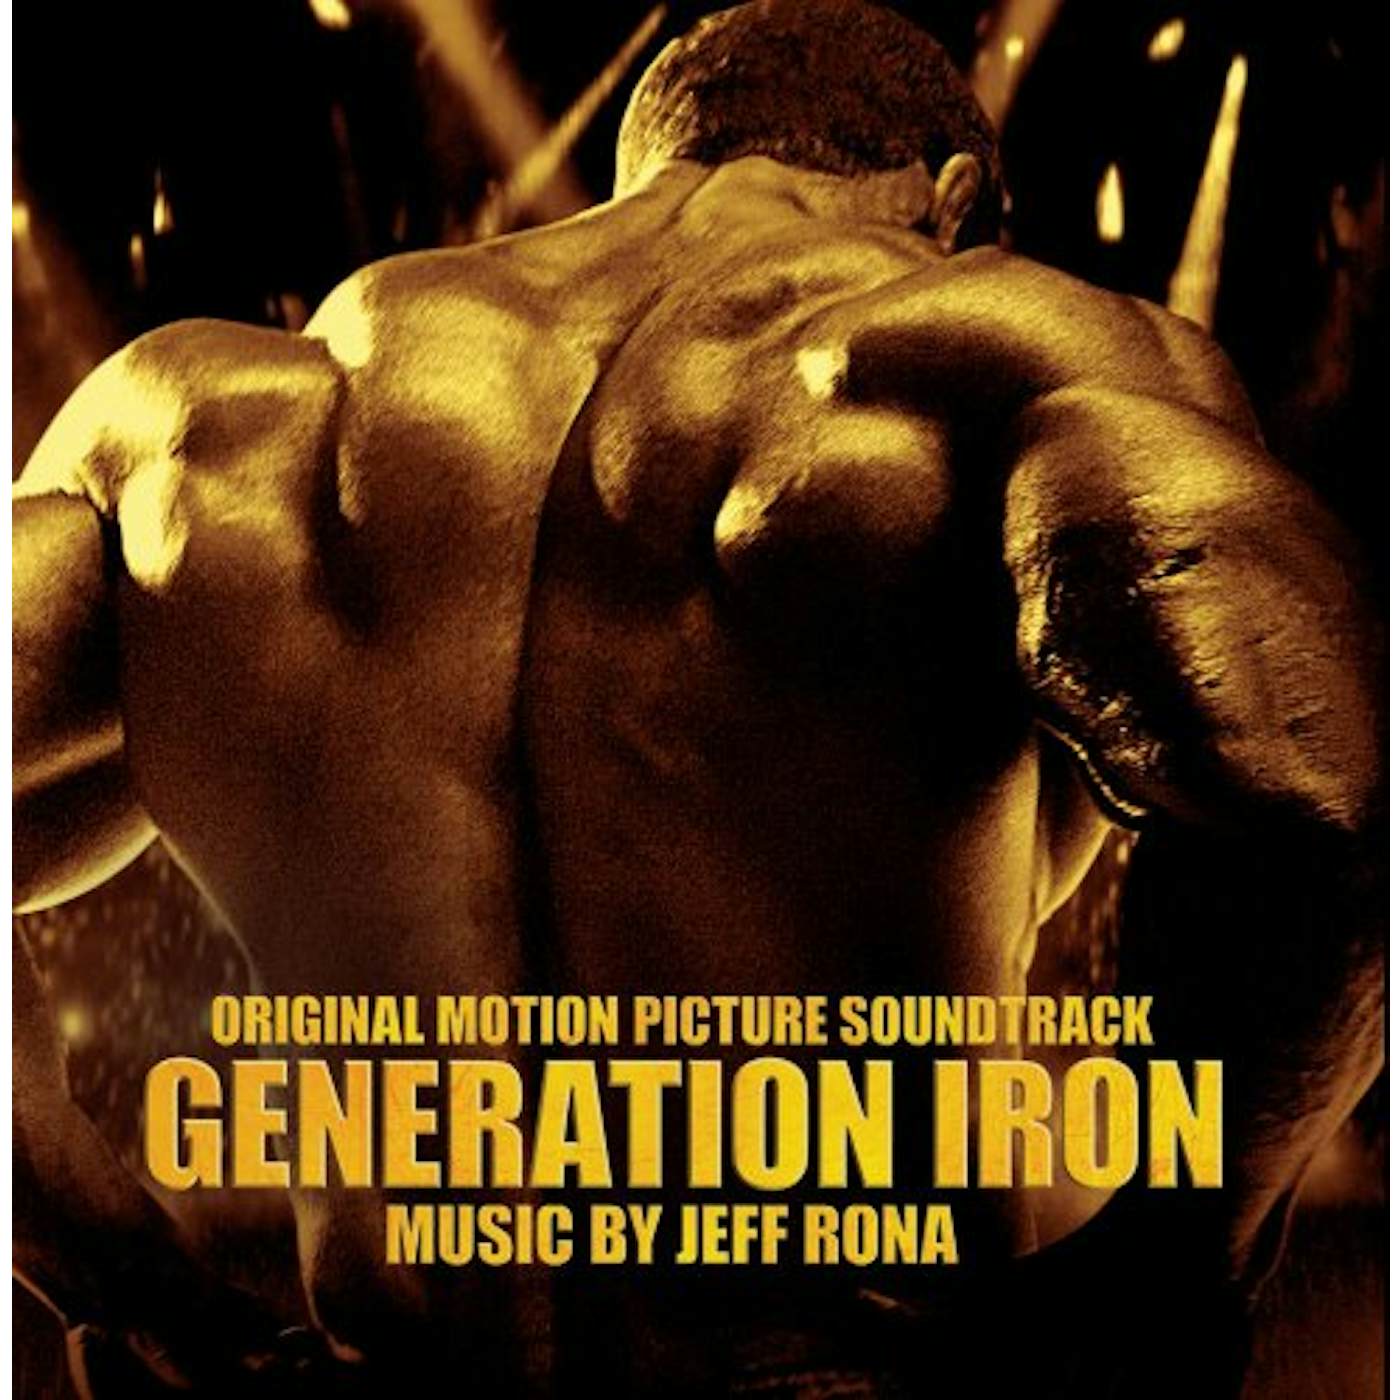 Jeff Rona GENERATION IRON CD